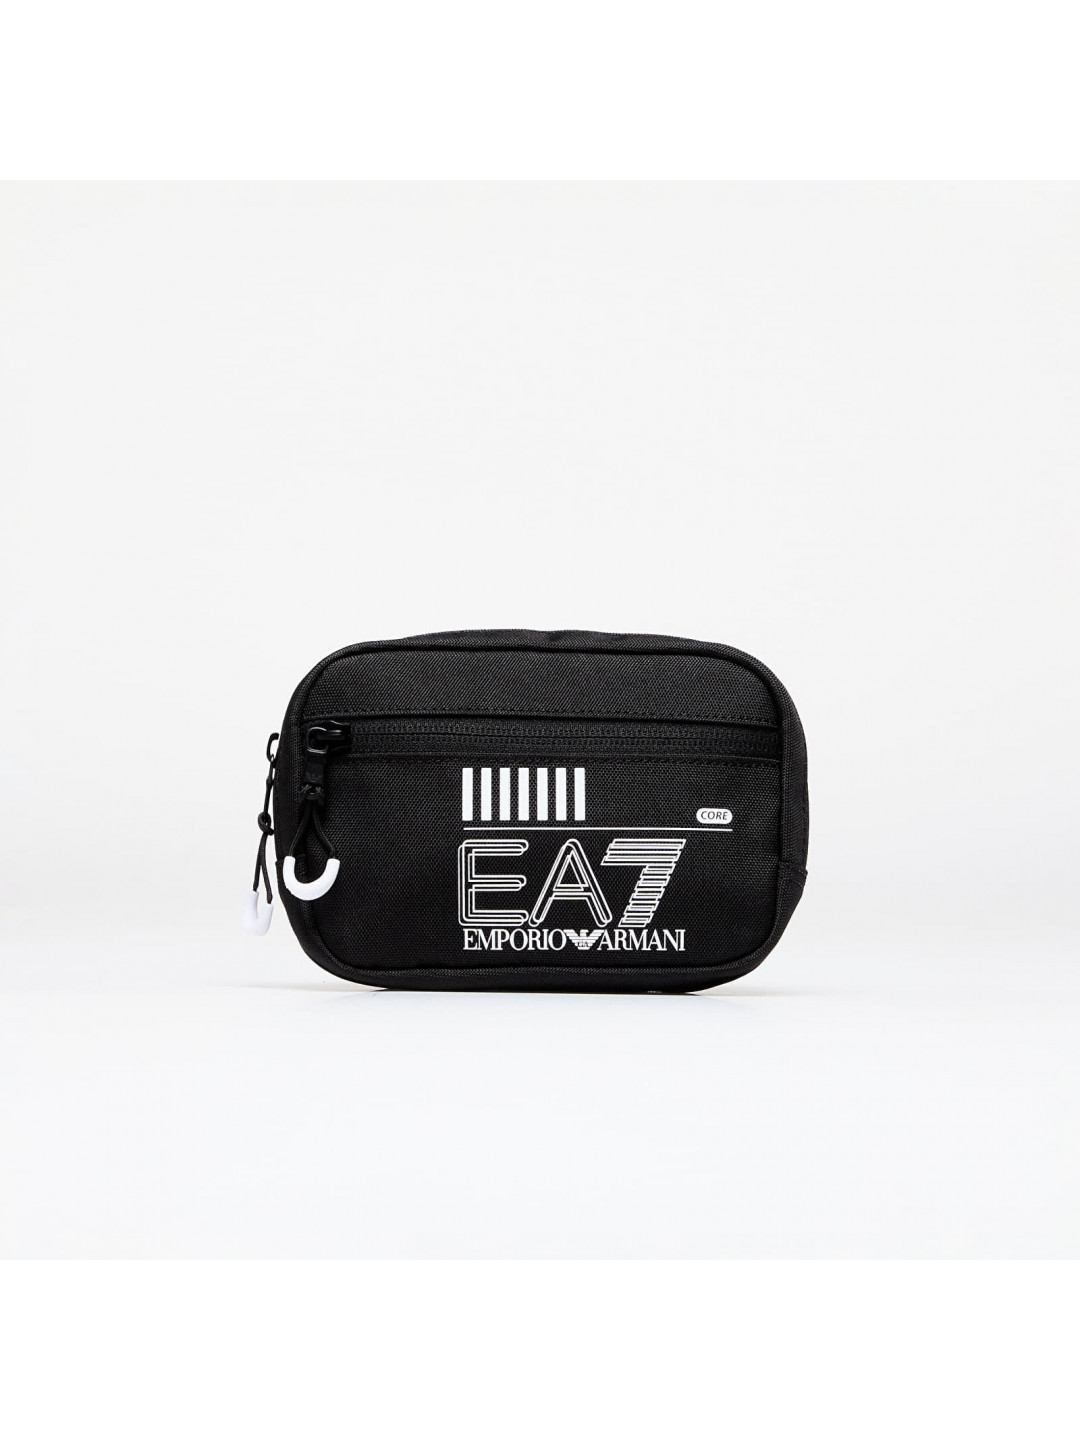 EA7 Emporio Armani Unisex Small Pouch Bag Black White Logo